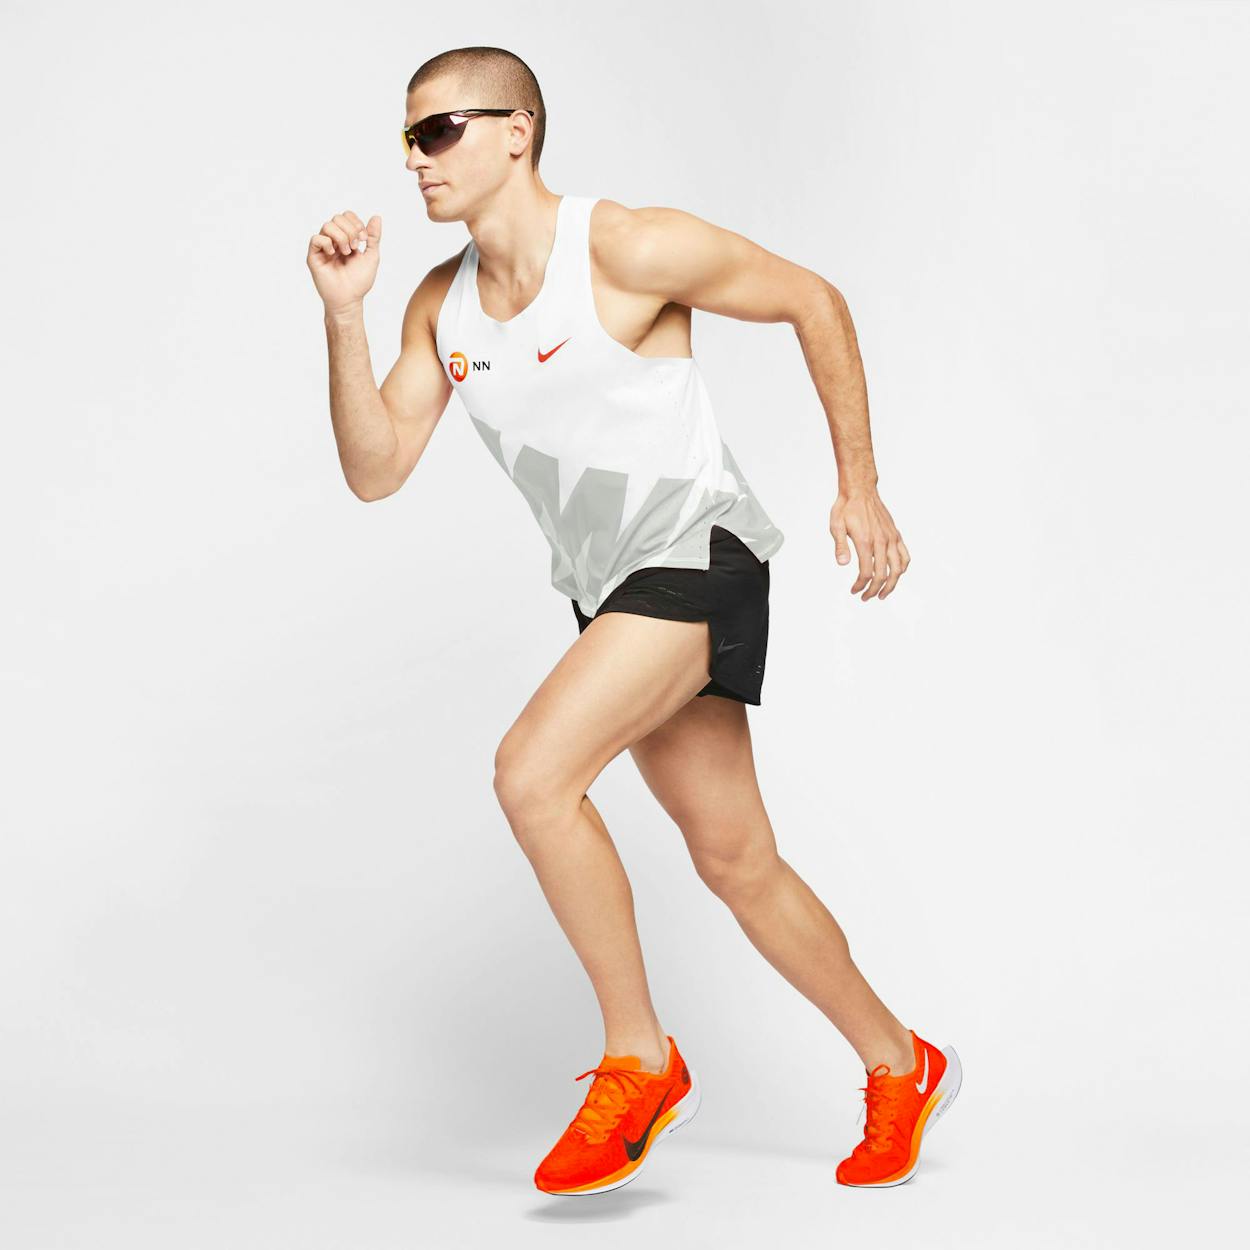 Inactivo magia Precursor Nike AeroSwift NN Running Team Singlet Men | 21RUN